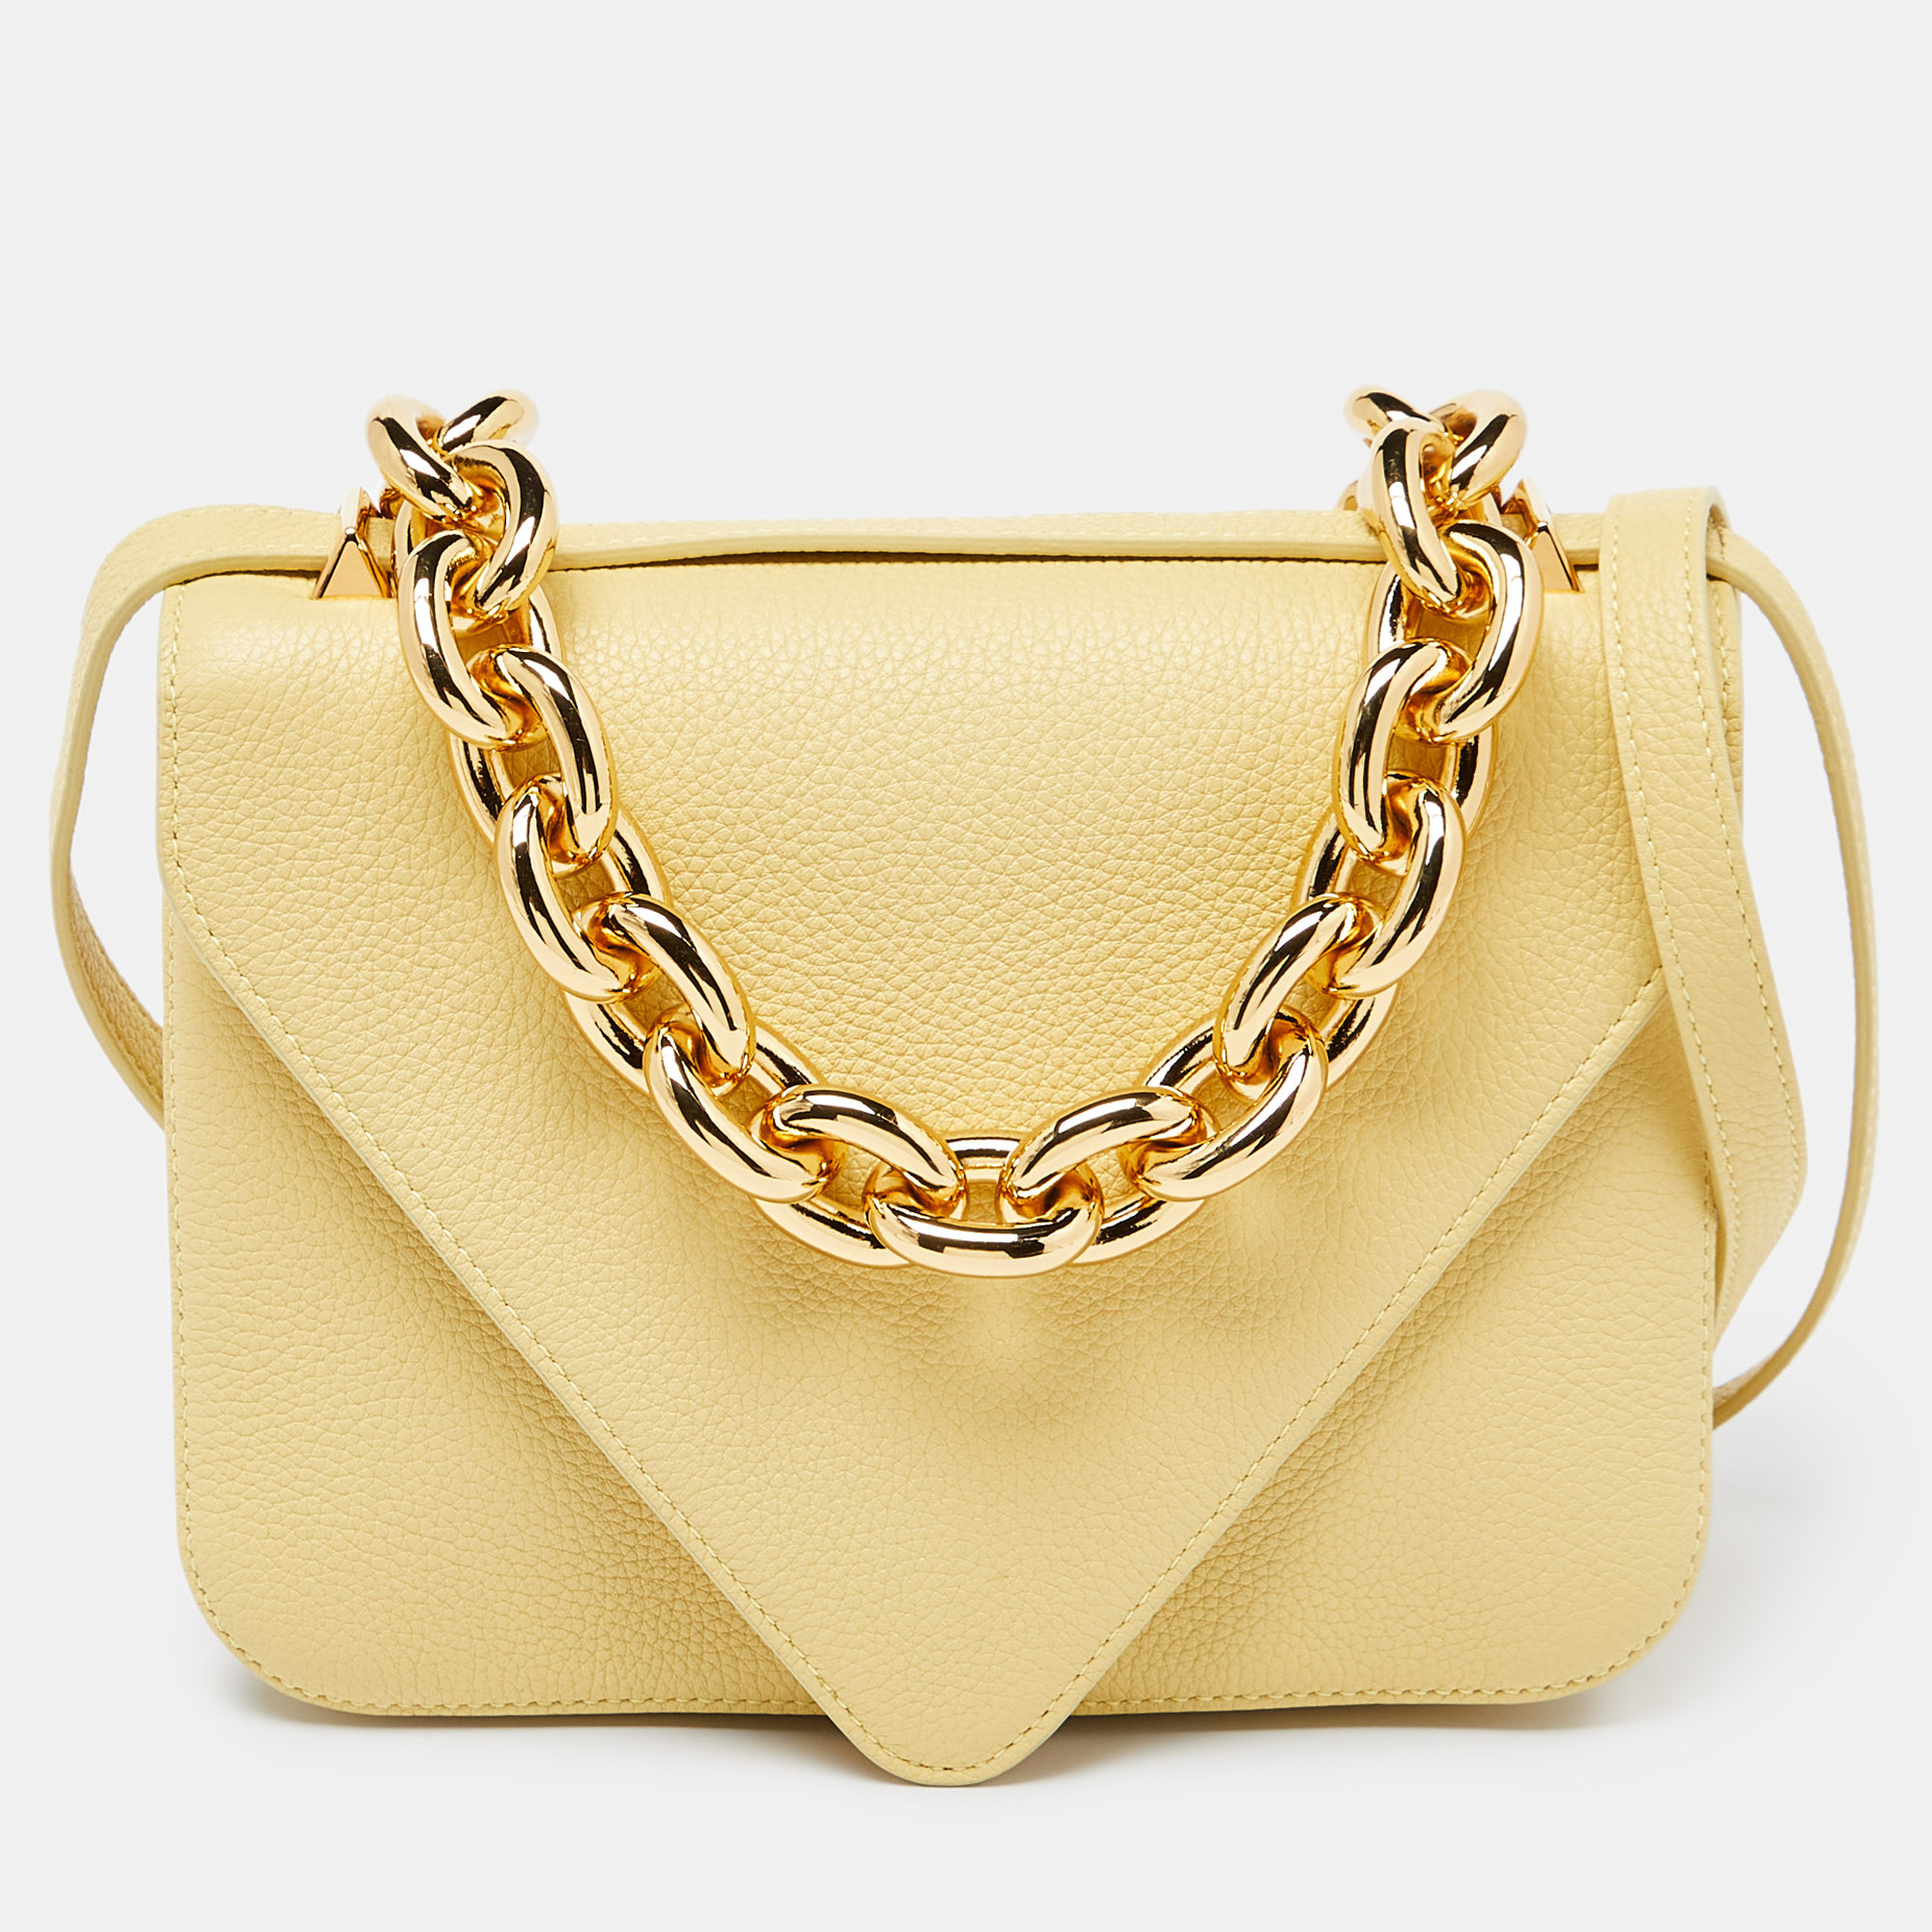 Bottega veneta yellow leather mount envelope top handle bag